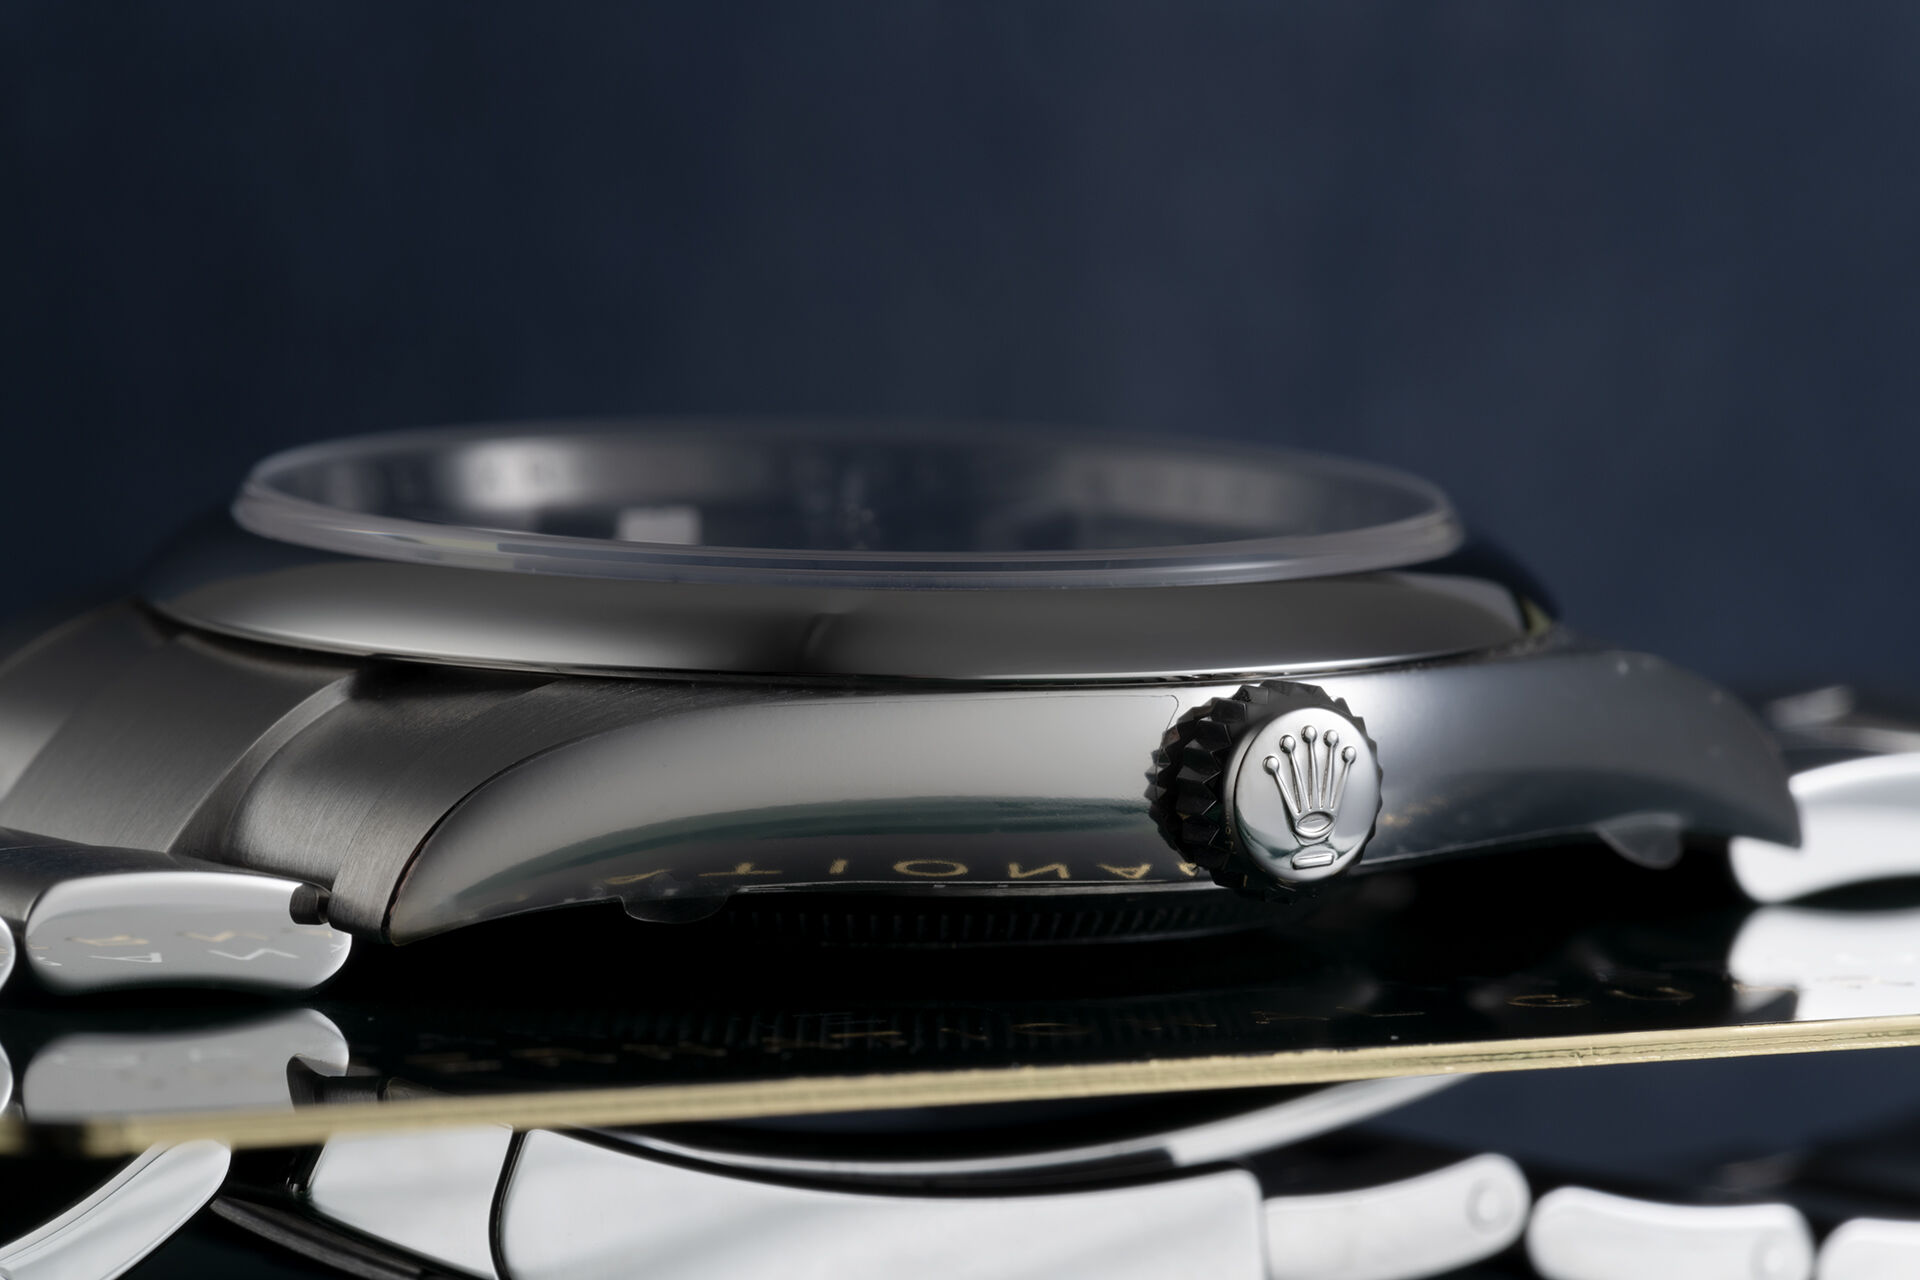 ref 124300 | New Release - 5 Year Warranty | Rolex Oyster Perpetual